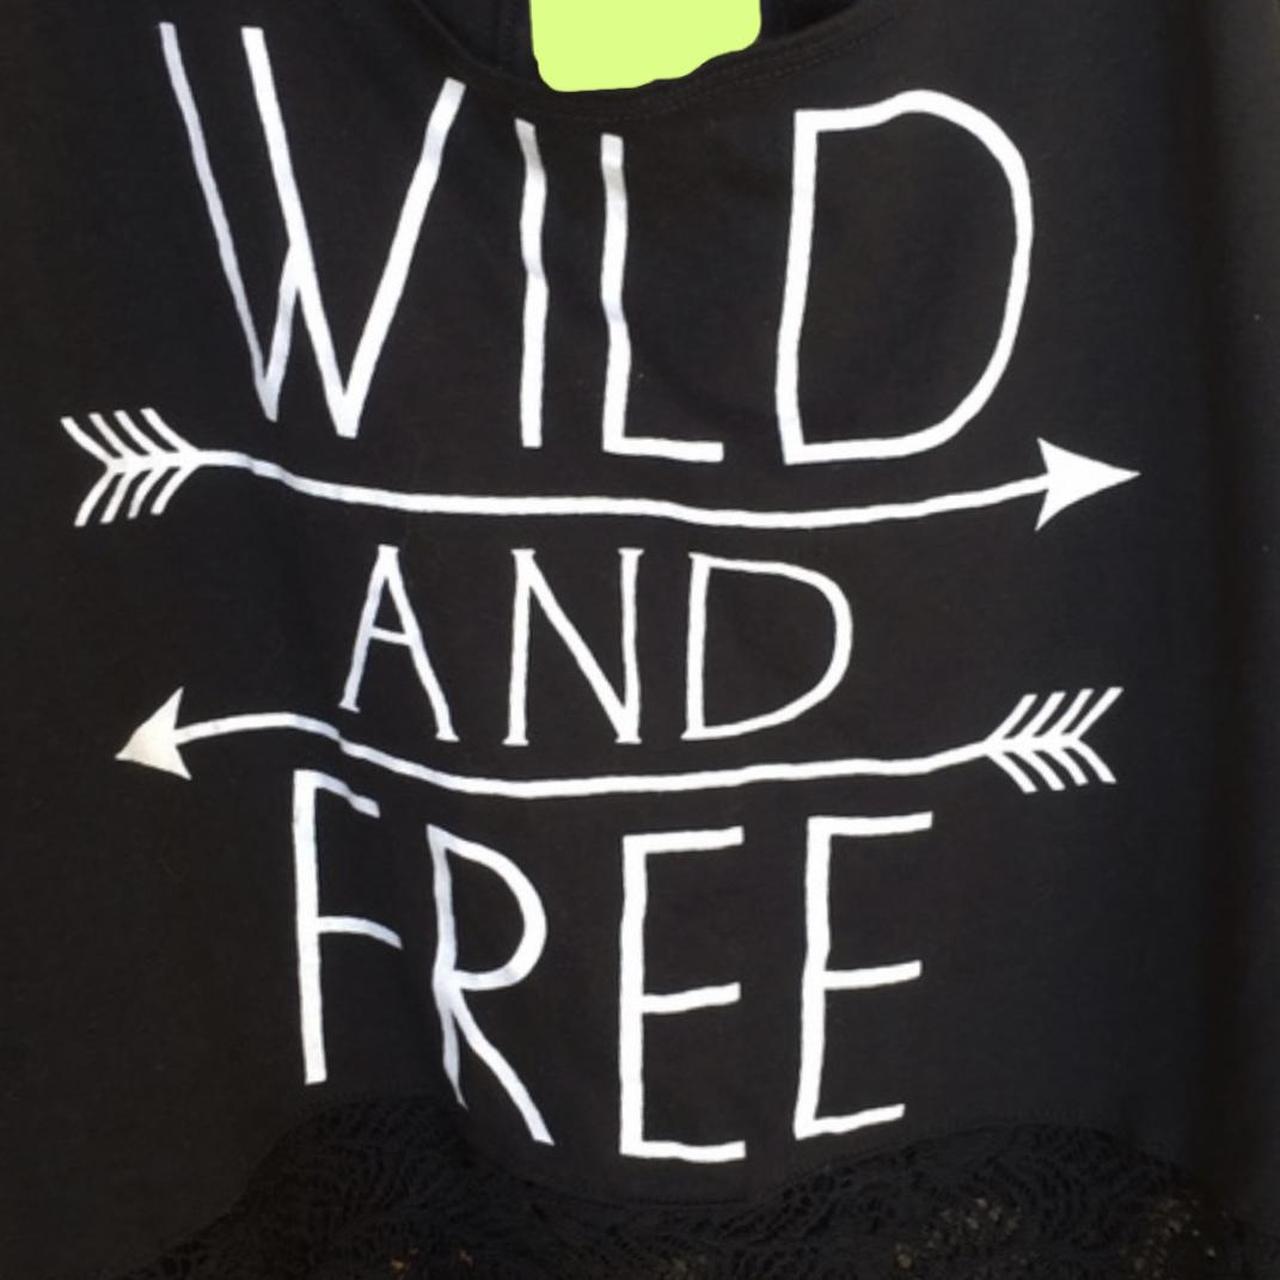 Product Image 2 - “Wild & Free” Crop Top

Free